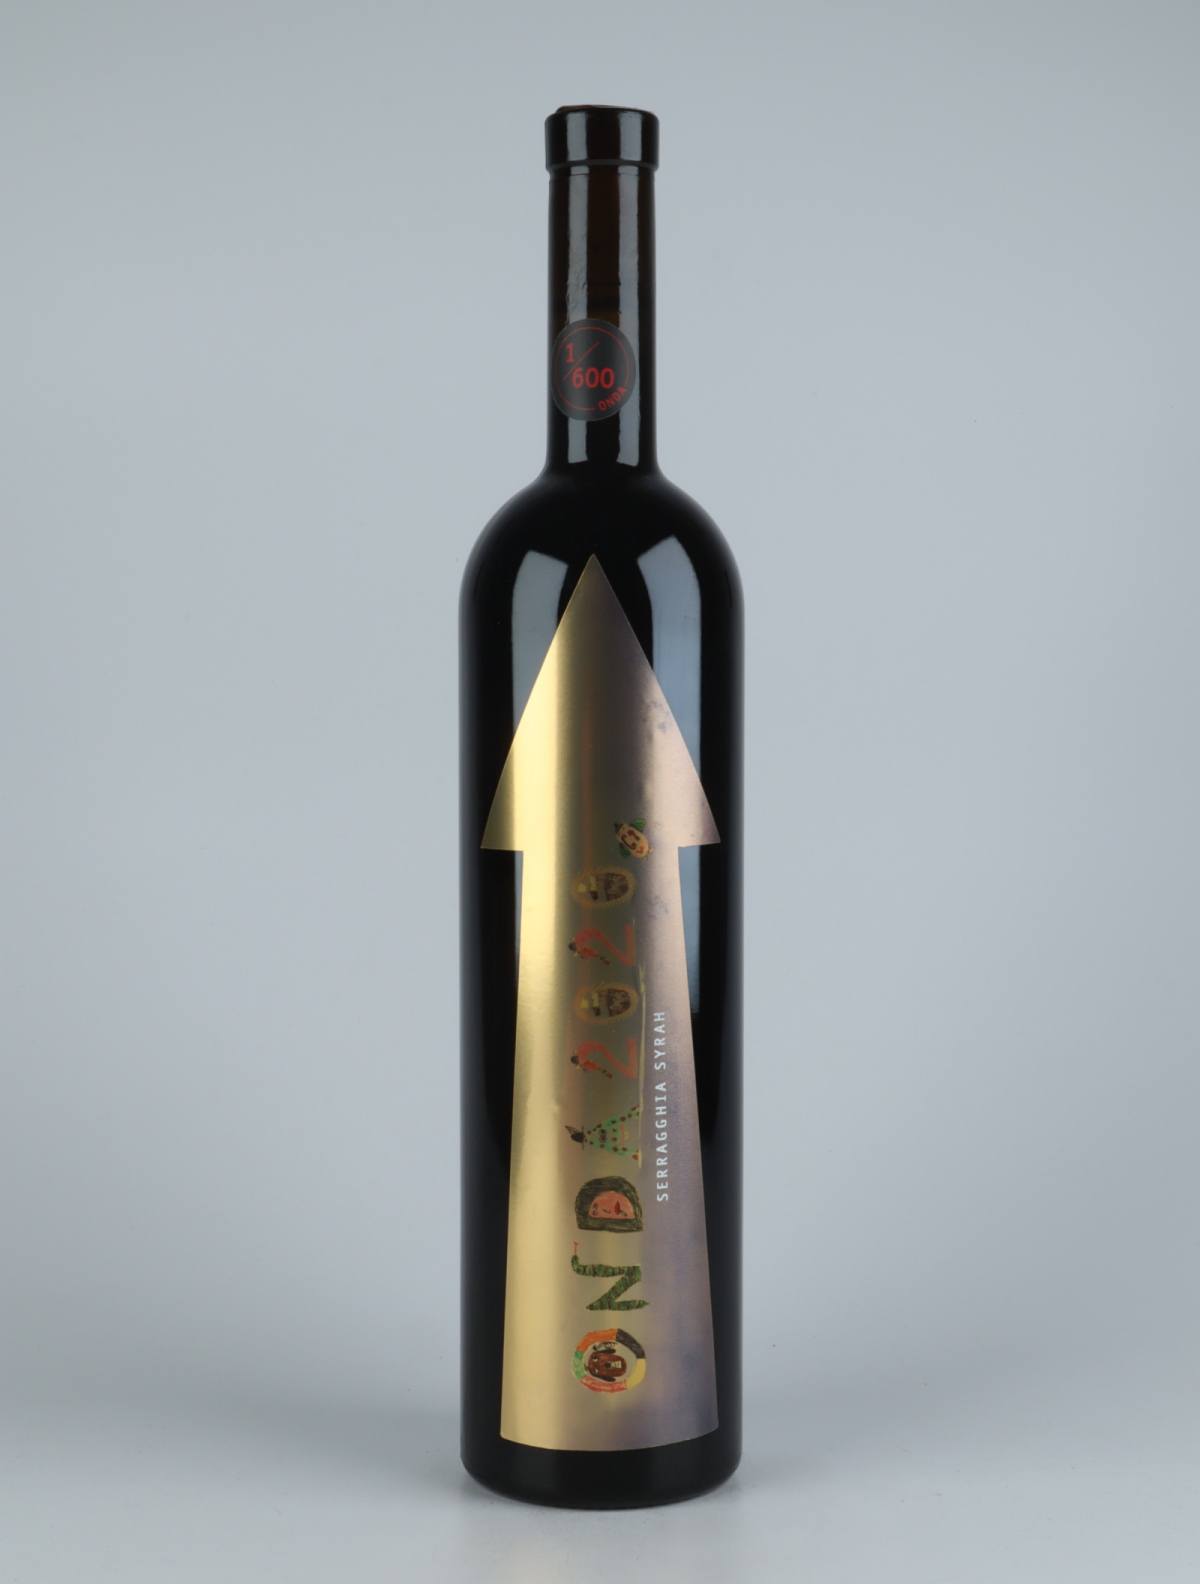 A bottle 2020 Rouge Onda Vingt Vingt Red wine from Gabrio Bini, Sicily in Italy